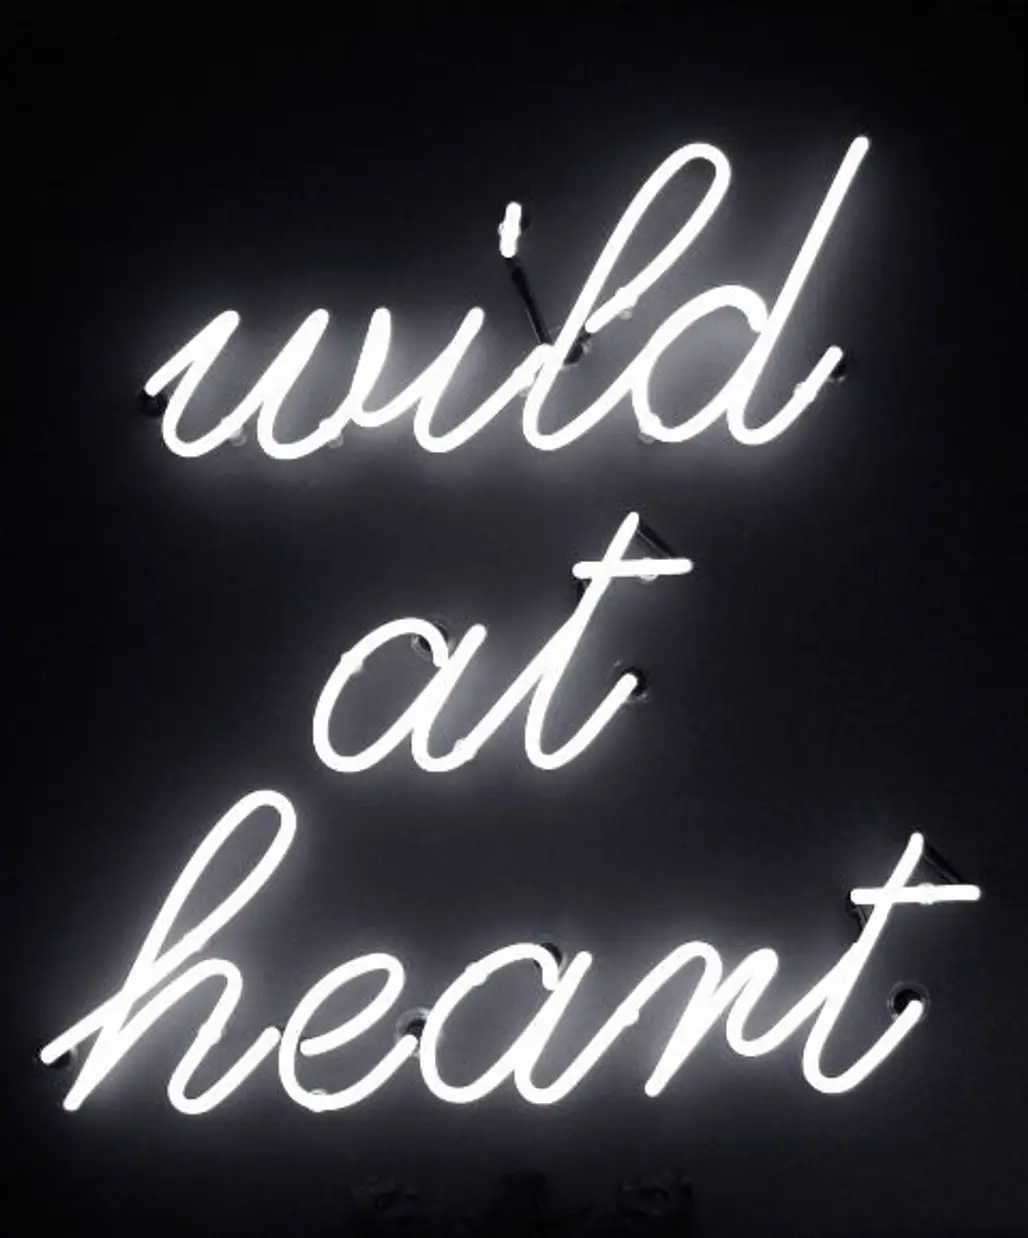 "wild at Heart"